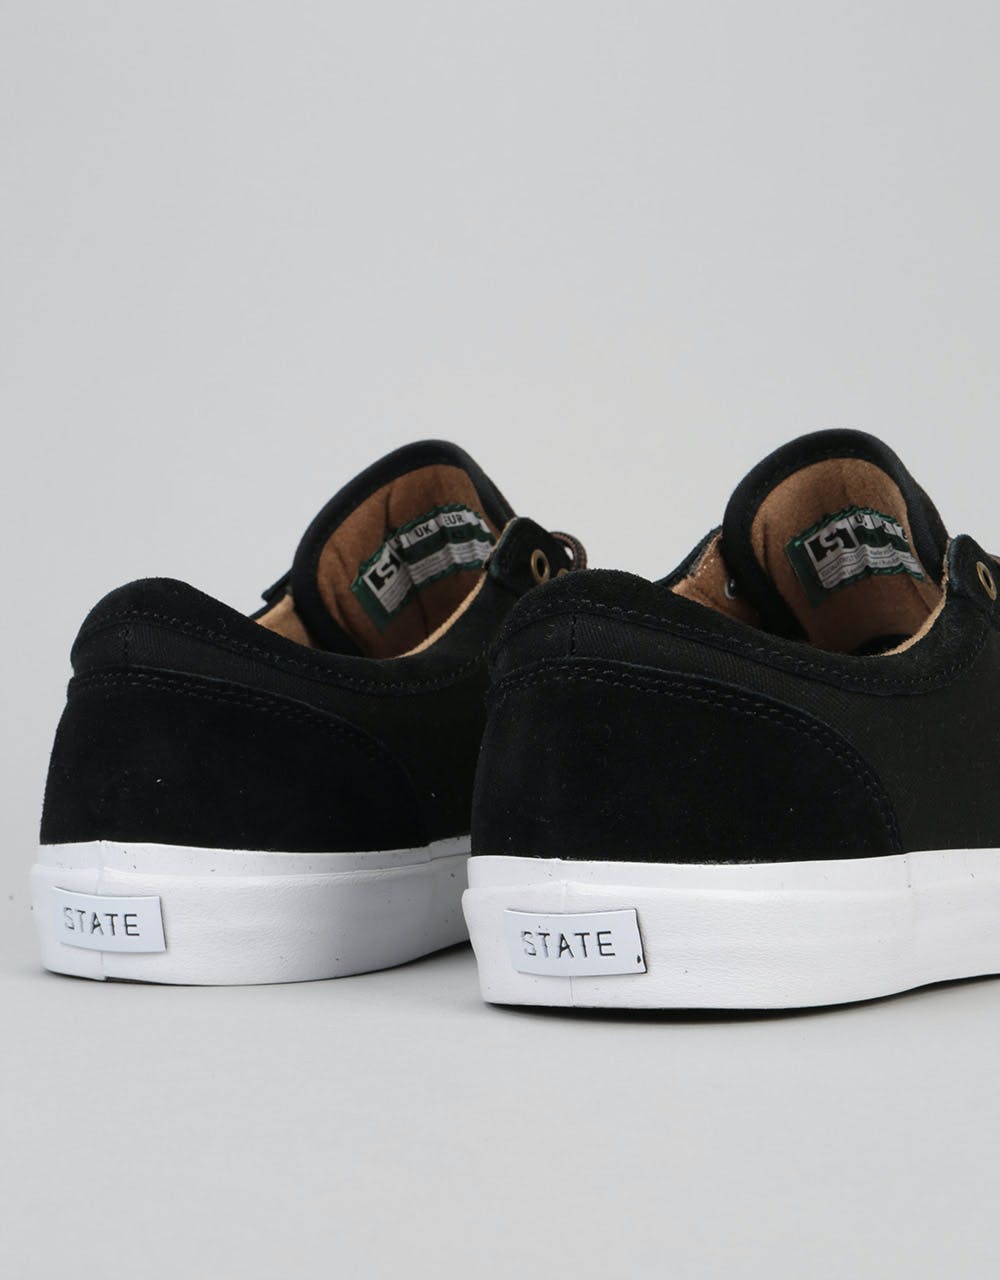 State Elgin Skate Shoes - Black/Brown Suede/Canvas